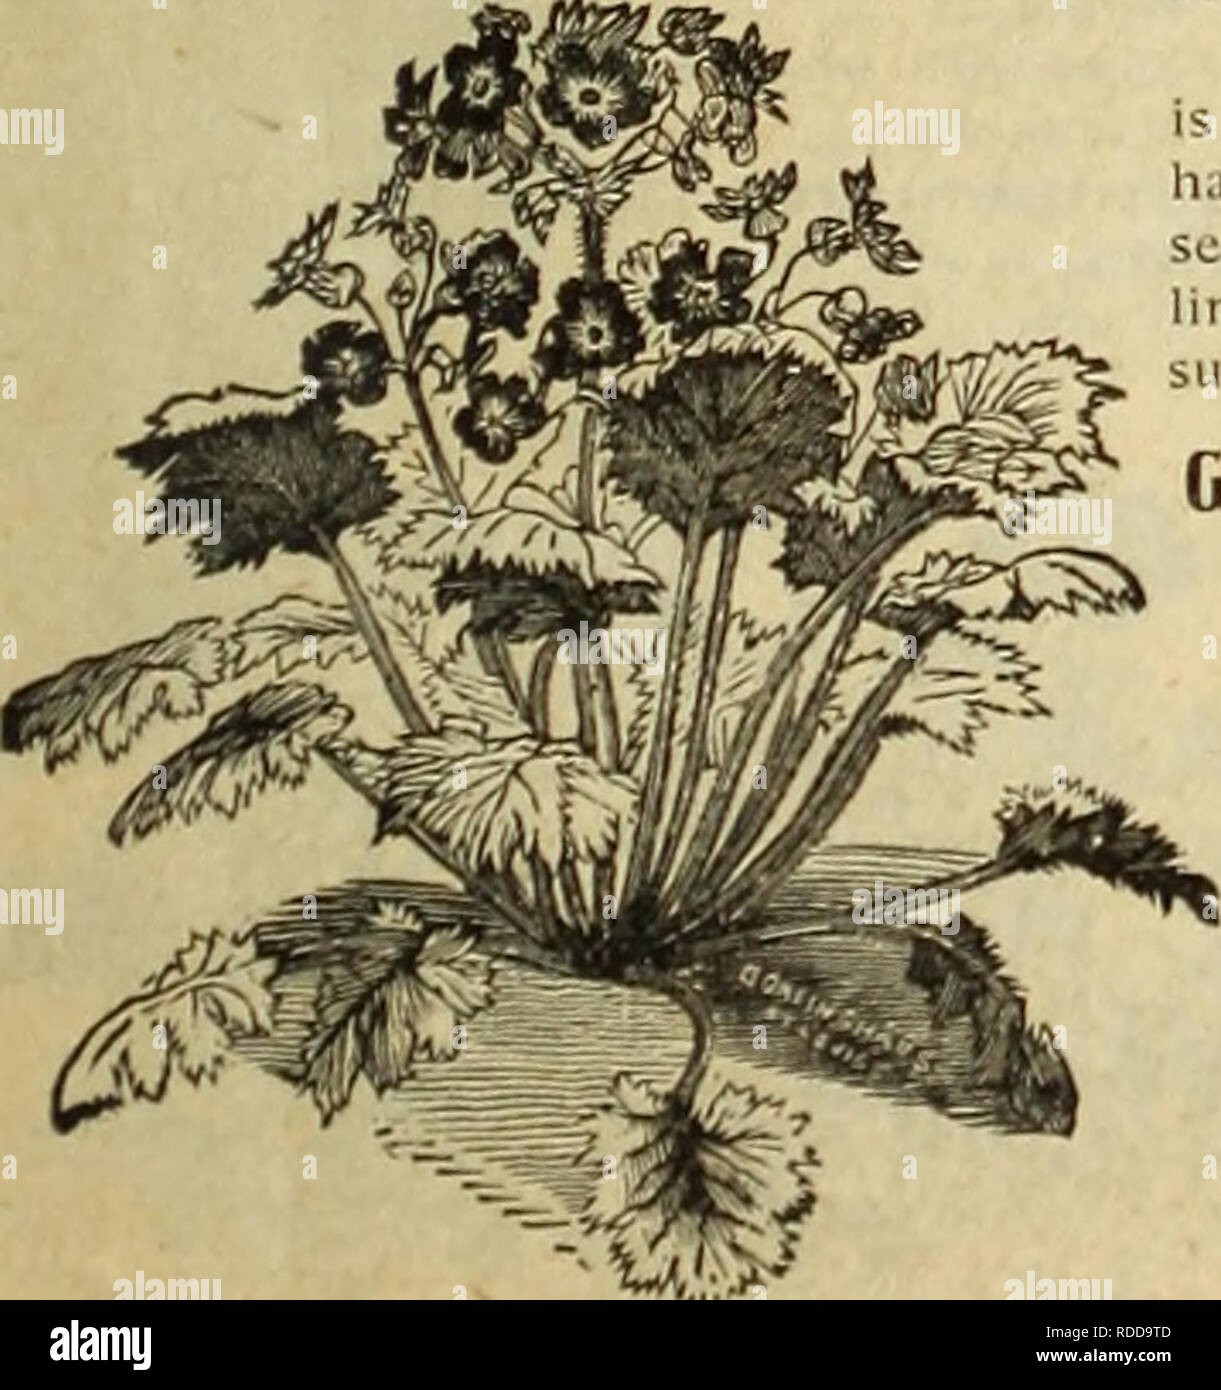 . E. H. Hunt's catalogue. Nurseries (Horticulture) Illinois Catalogs; Bulbs (Plants) Catalogs; Flowers Catalogs; Gardening Equipment and supplies Catalogs. PHLOX DRUMMONDI. RICINUS (CASTOR OIL PLANT.) Per oz. Borboniensis 15 Gibsoni.. IS Per oz. Africanus 15 Sanguineus 10 Cambodgensis. (,U, Mixed lb., 75c. 10 PHLOX DRUMMONDI. Trade Pkt. Oz. White, Scarlet, Pink, each 10 60 Mixed.. : 10 40 Atropurpurea, blood red  10 GO Star of Quedlinburg 10 GRANDIFLORA; OR, LARGE-FL. VARIETIES. Alba, white; Coccinea, scarlet; Rosea, pink, each 10 1.00 Splendens, crimson, white eye 10 1.00 Isabellina, yellow 1 Stock Photo